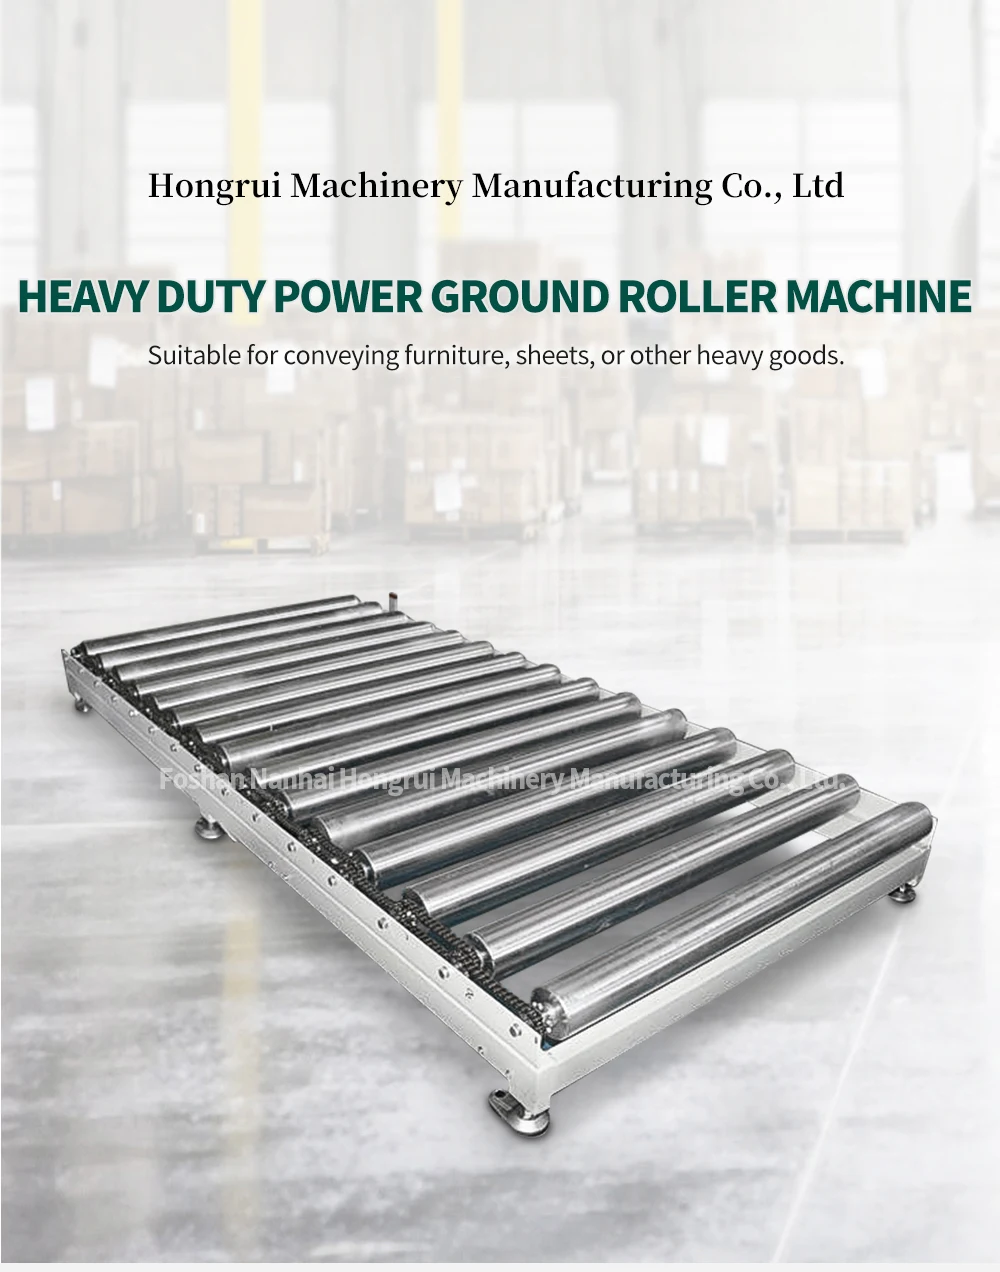 Hongrui CNC fully automatic drum type heavy-duty power ground roller machine factory